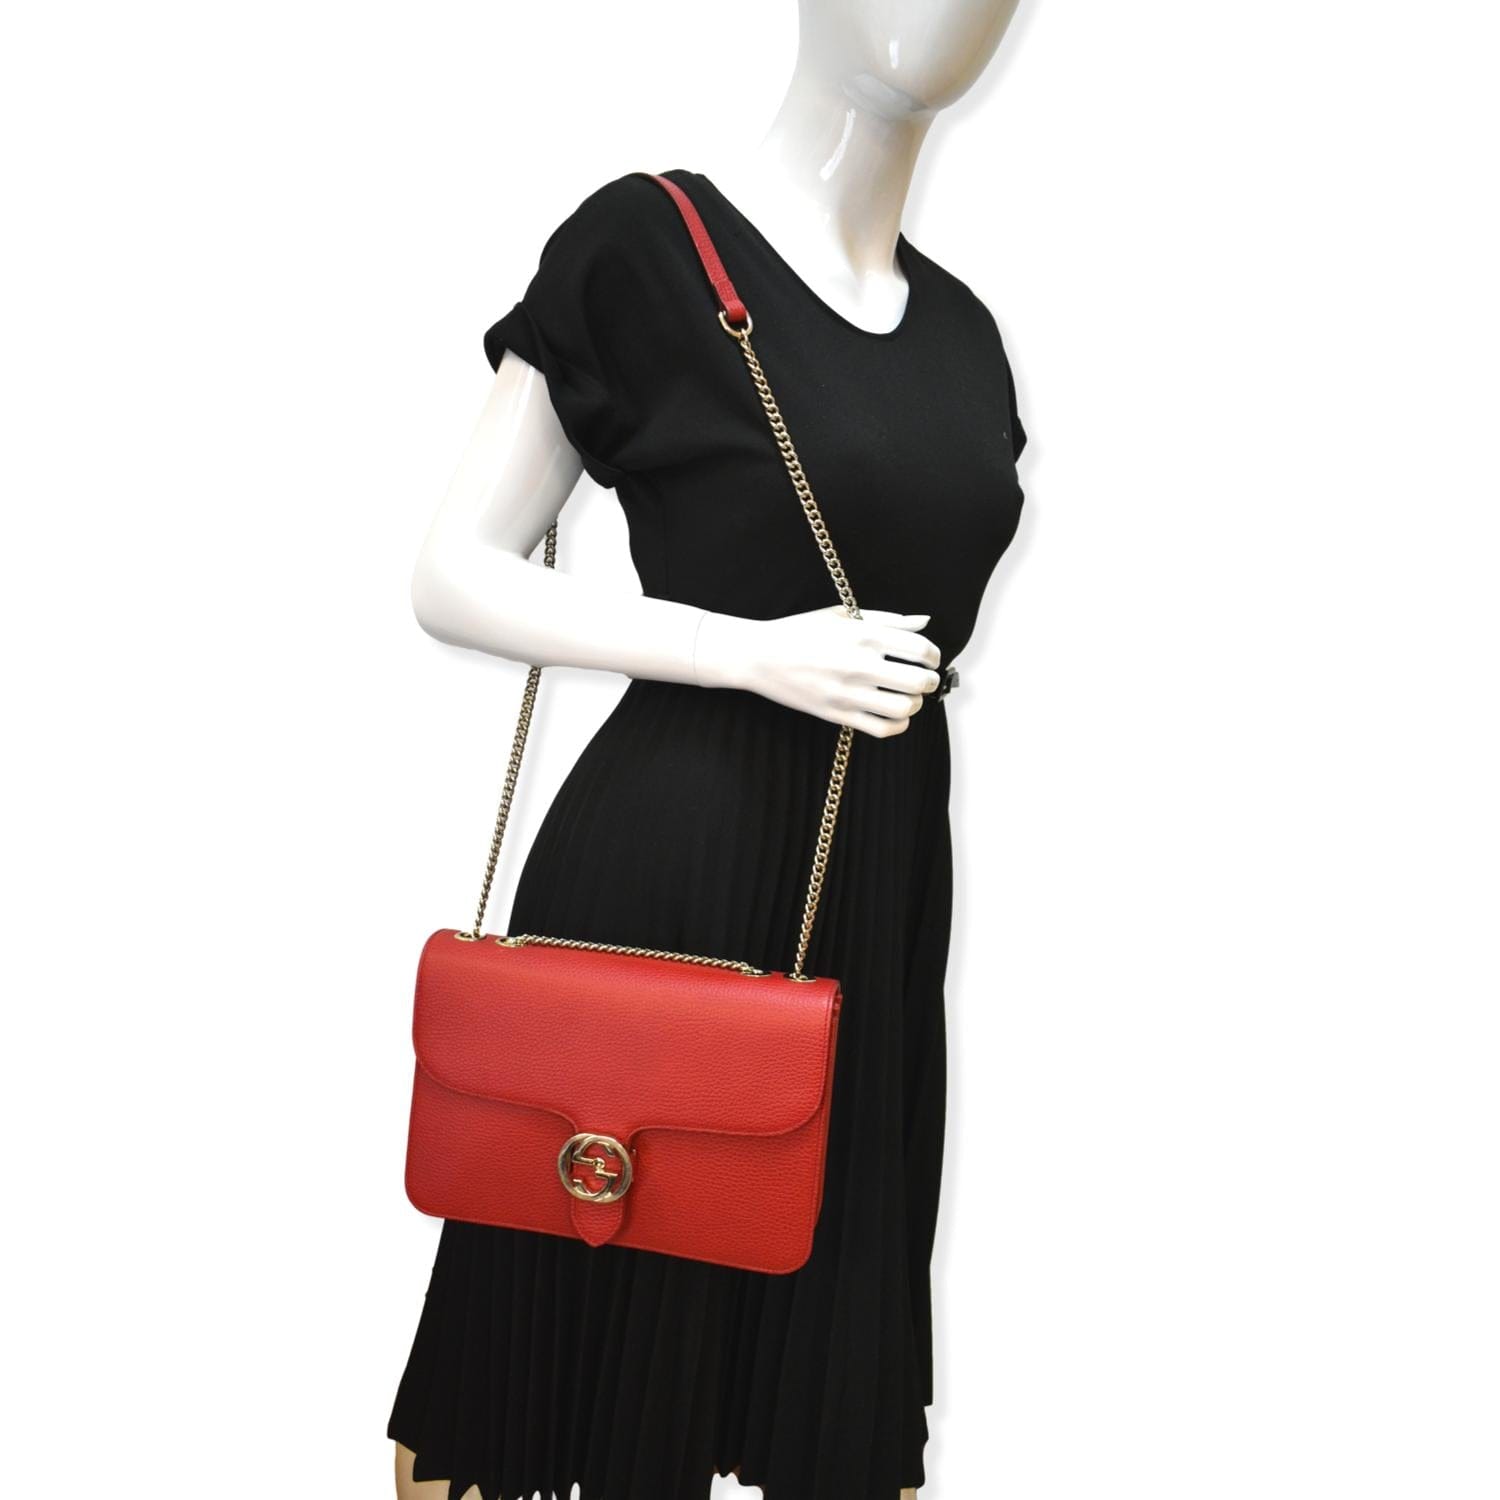 Gucci Borsa Interlocking GG Crossbody  Purses and handbags, Branded  handbags, Gucci leather